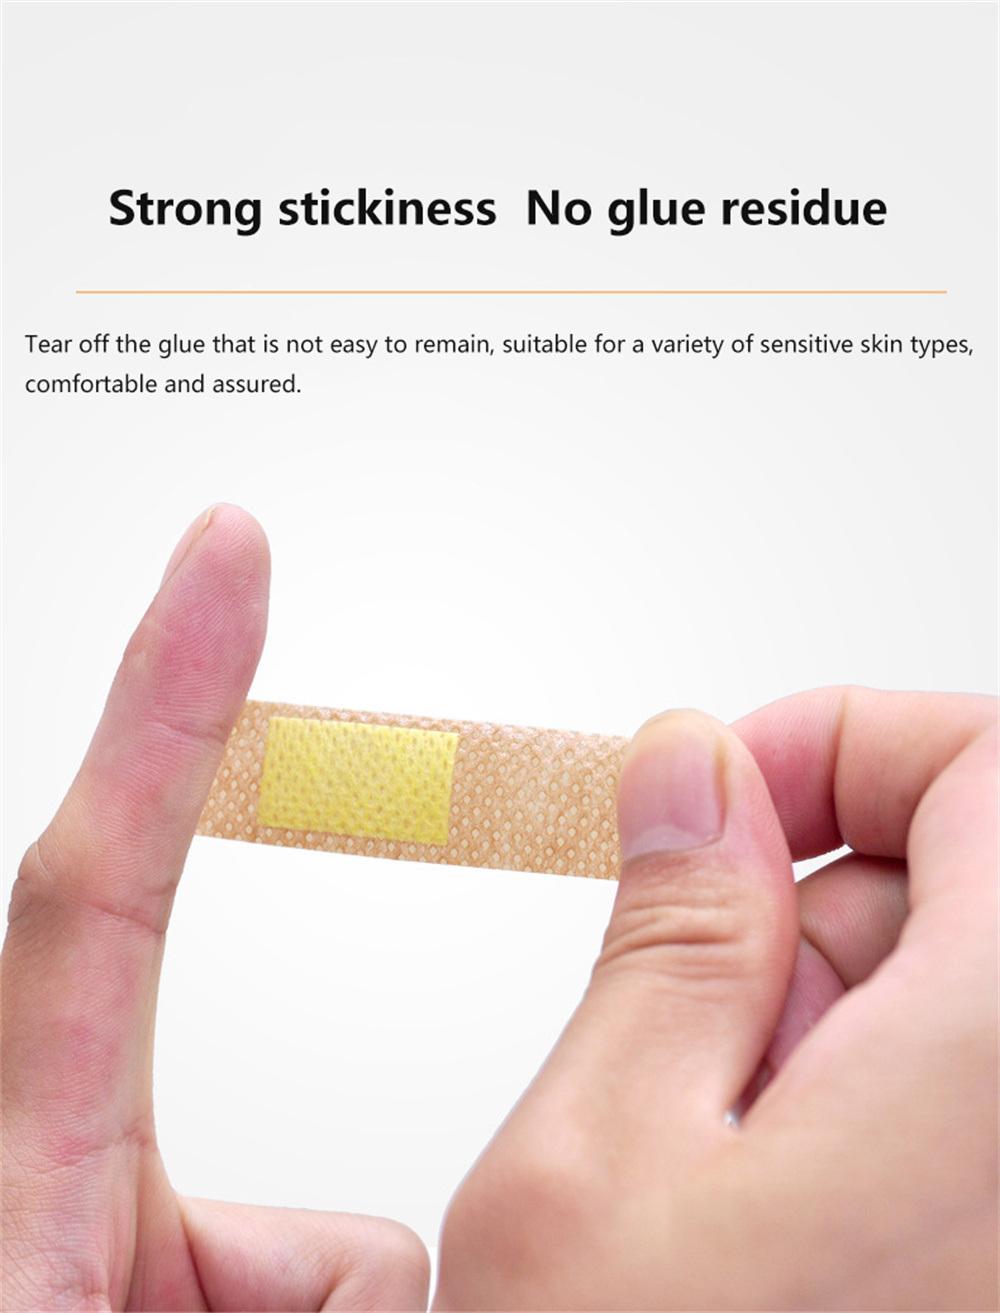 Waterproof First Aid Bandage Band Aid Adhesive Plasters PE Band-Aid